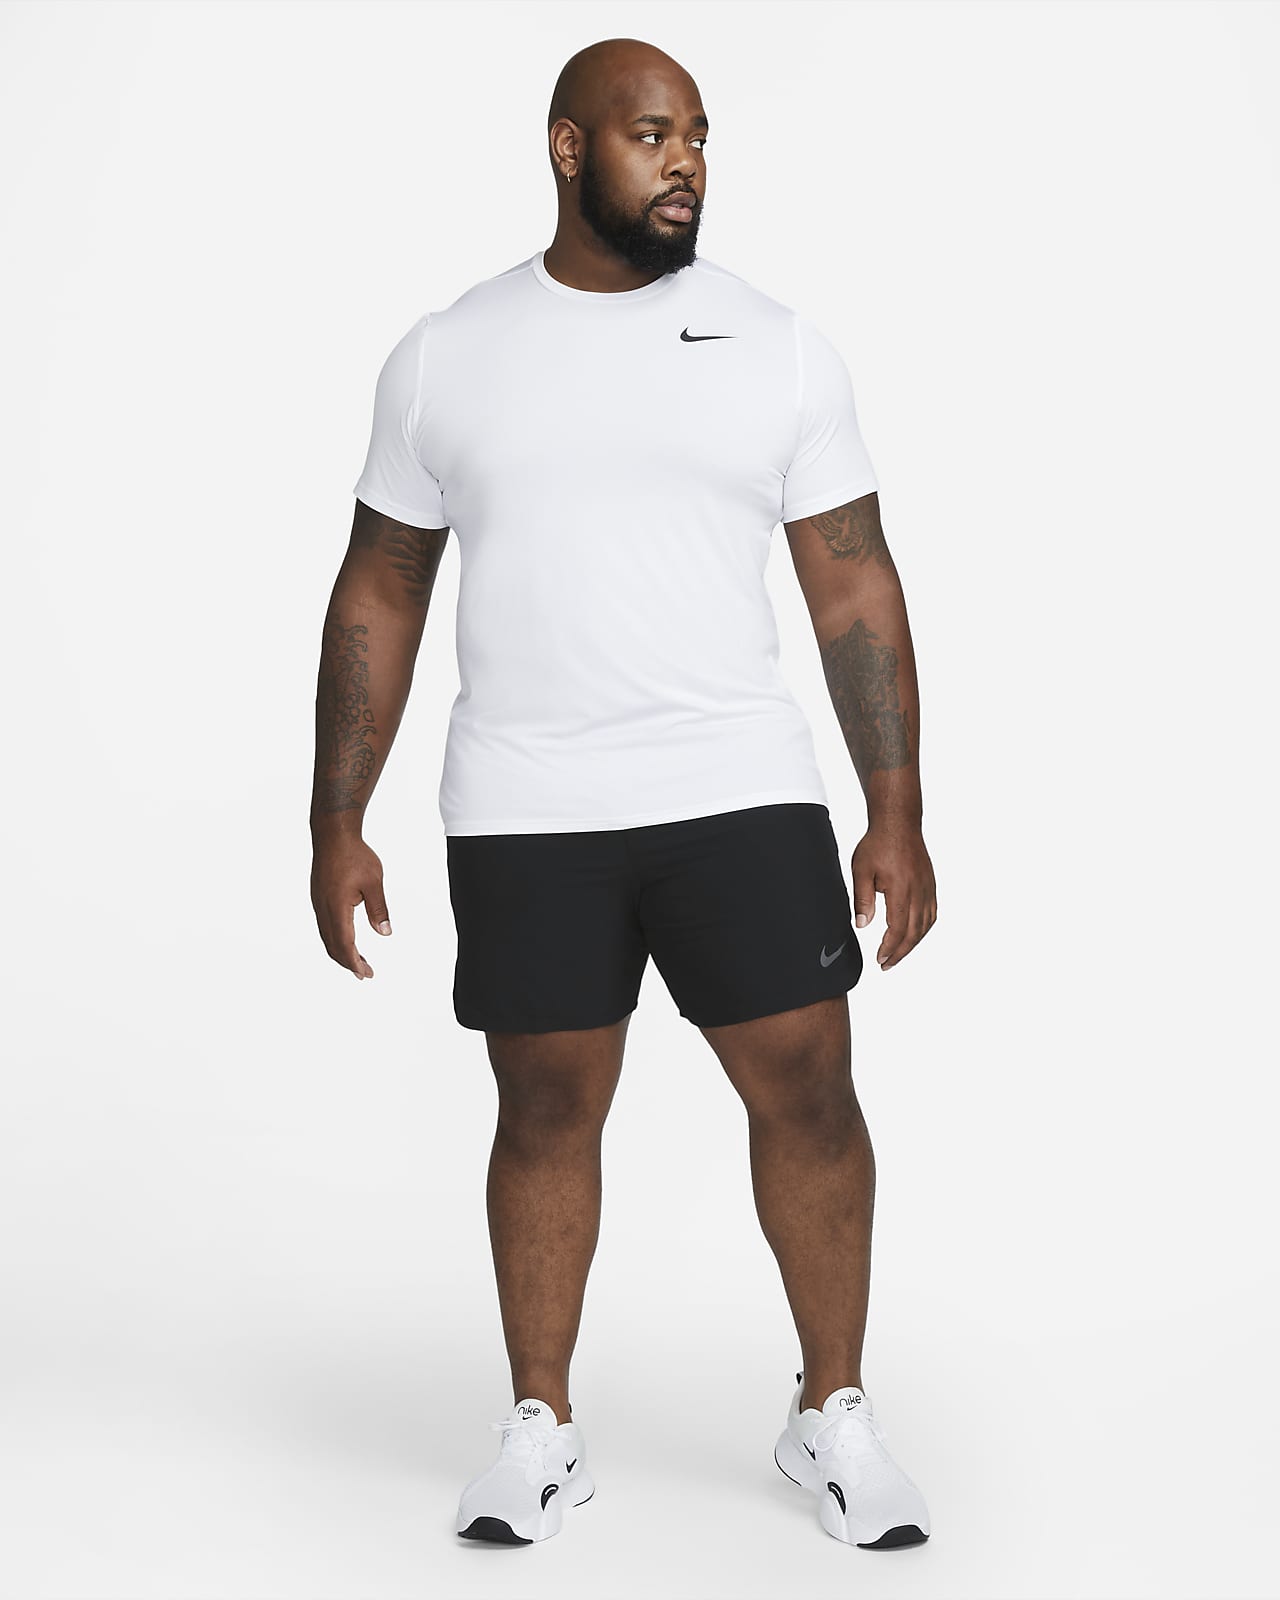 Mens Nike Running Compression Pants Hybrid Tights Shorts Small Black  CU5560-010